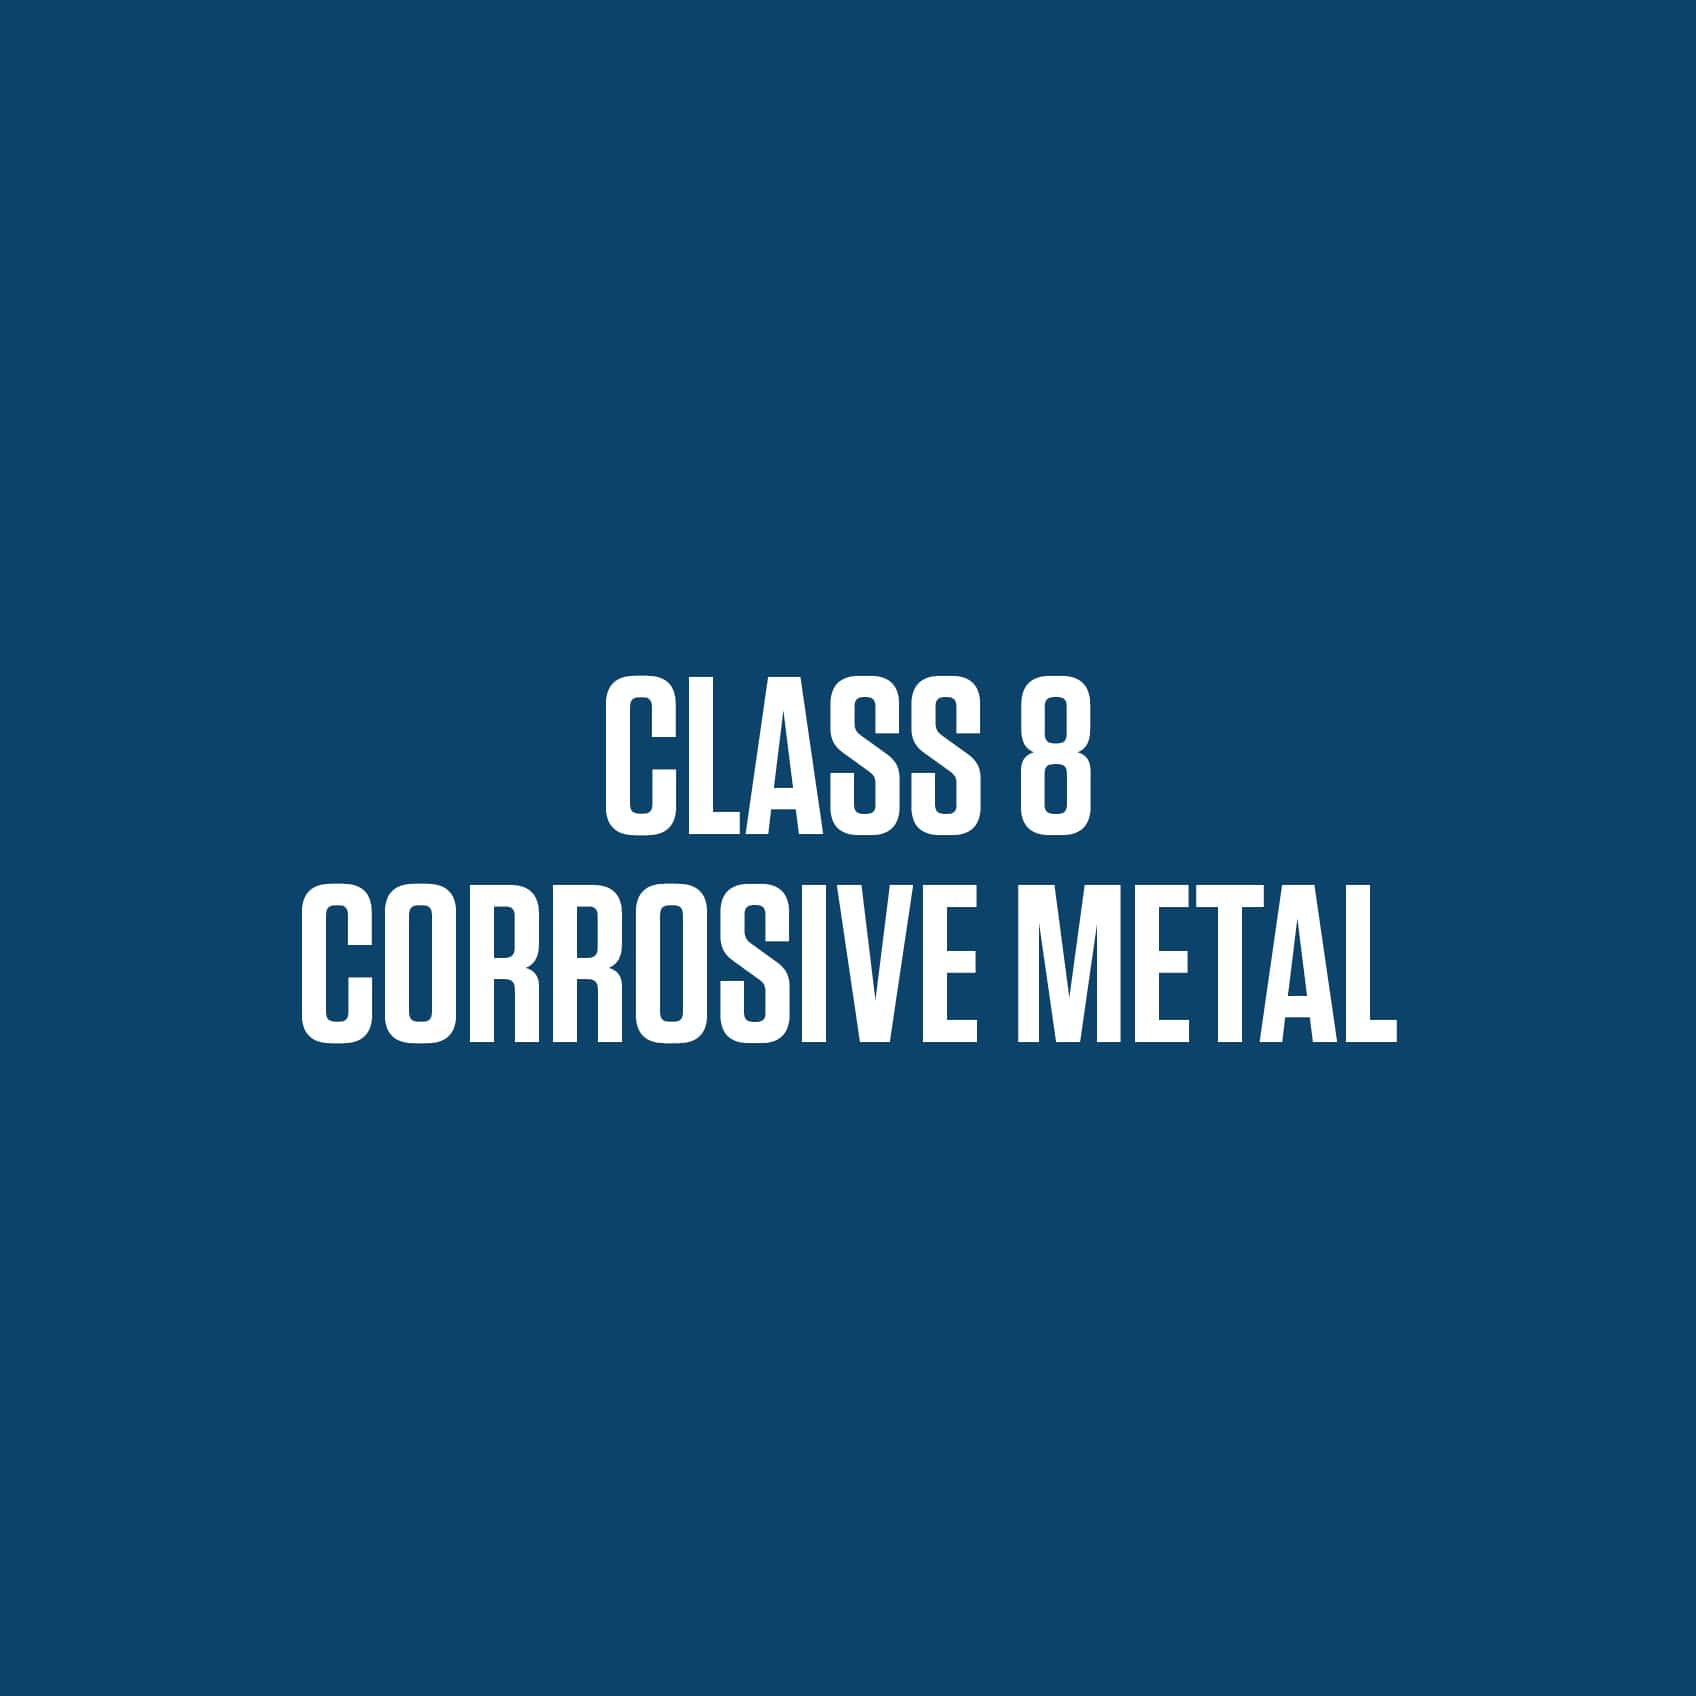 Class 8 Corrosive Metal